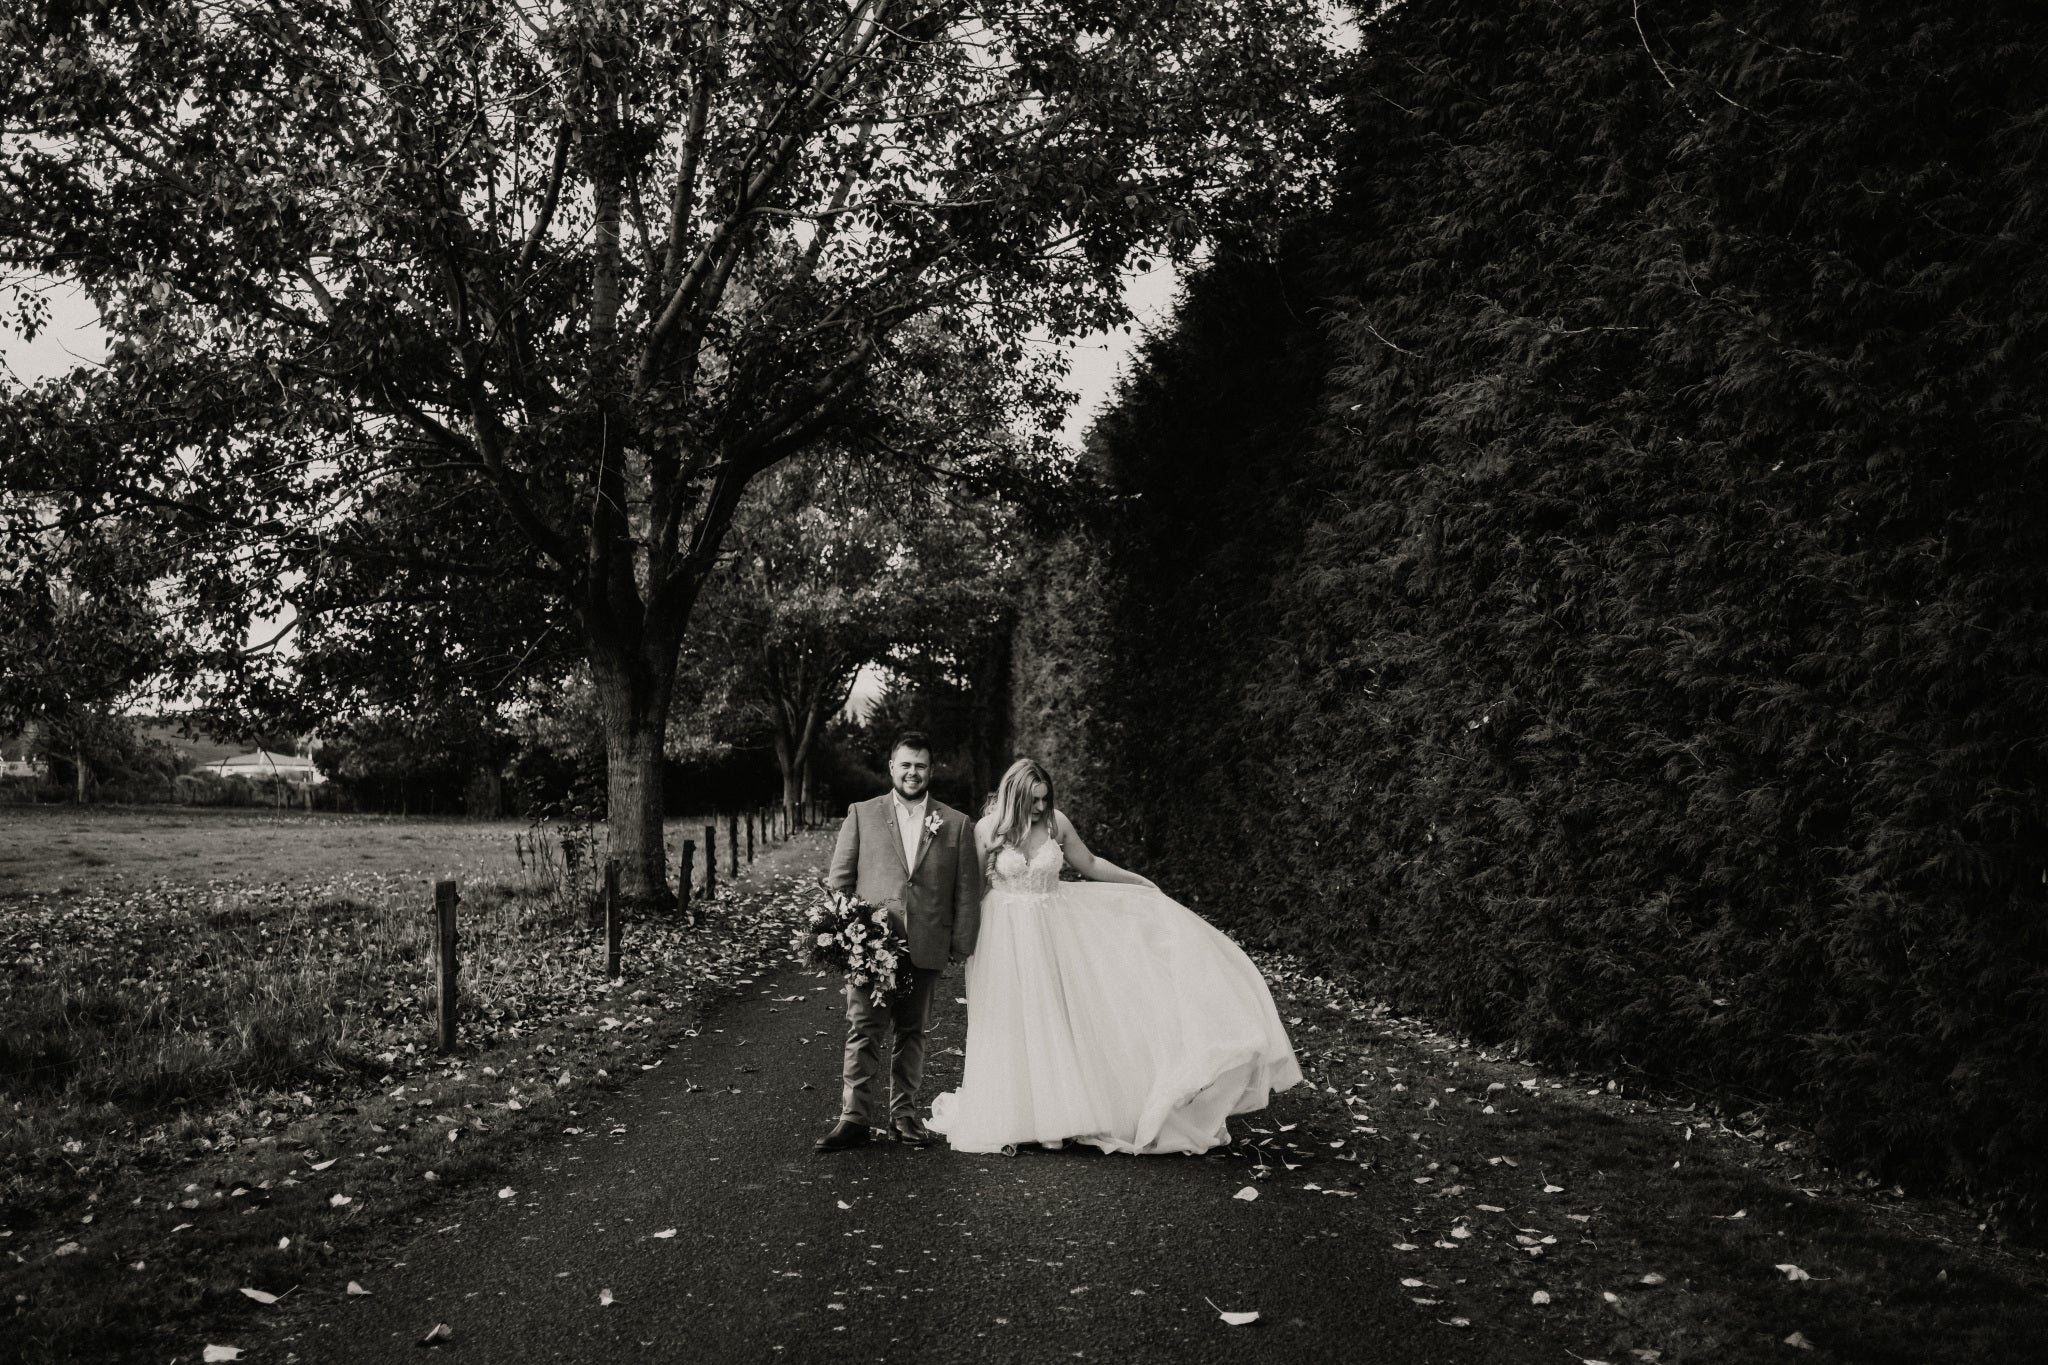 Lily + Josh | Makoura Lodge | The Paper Gazelle Wedding Feature